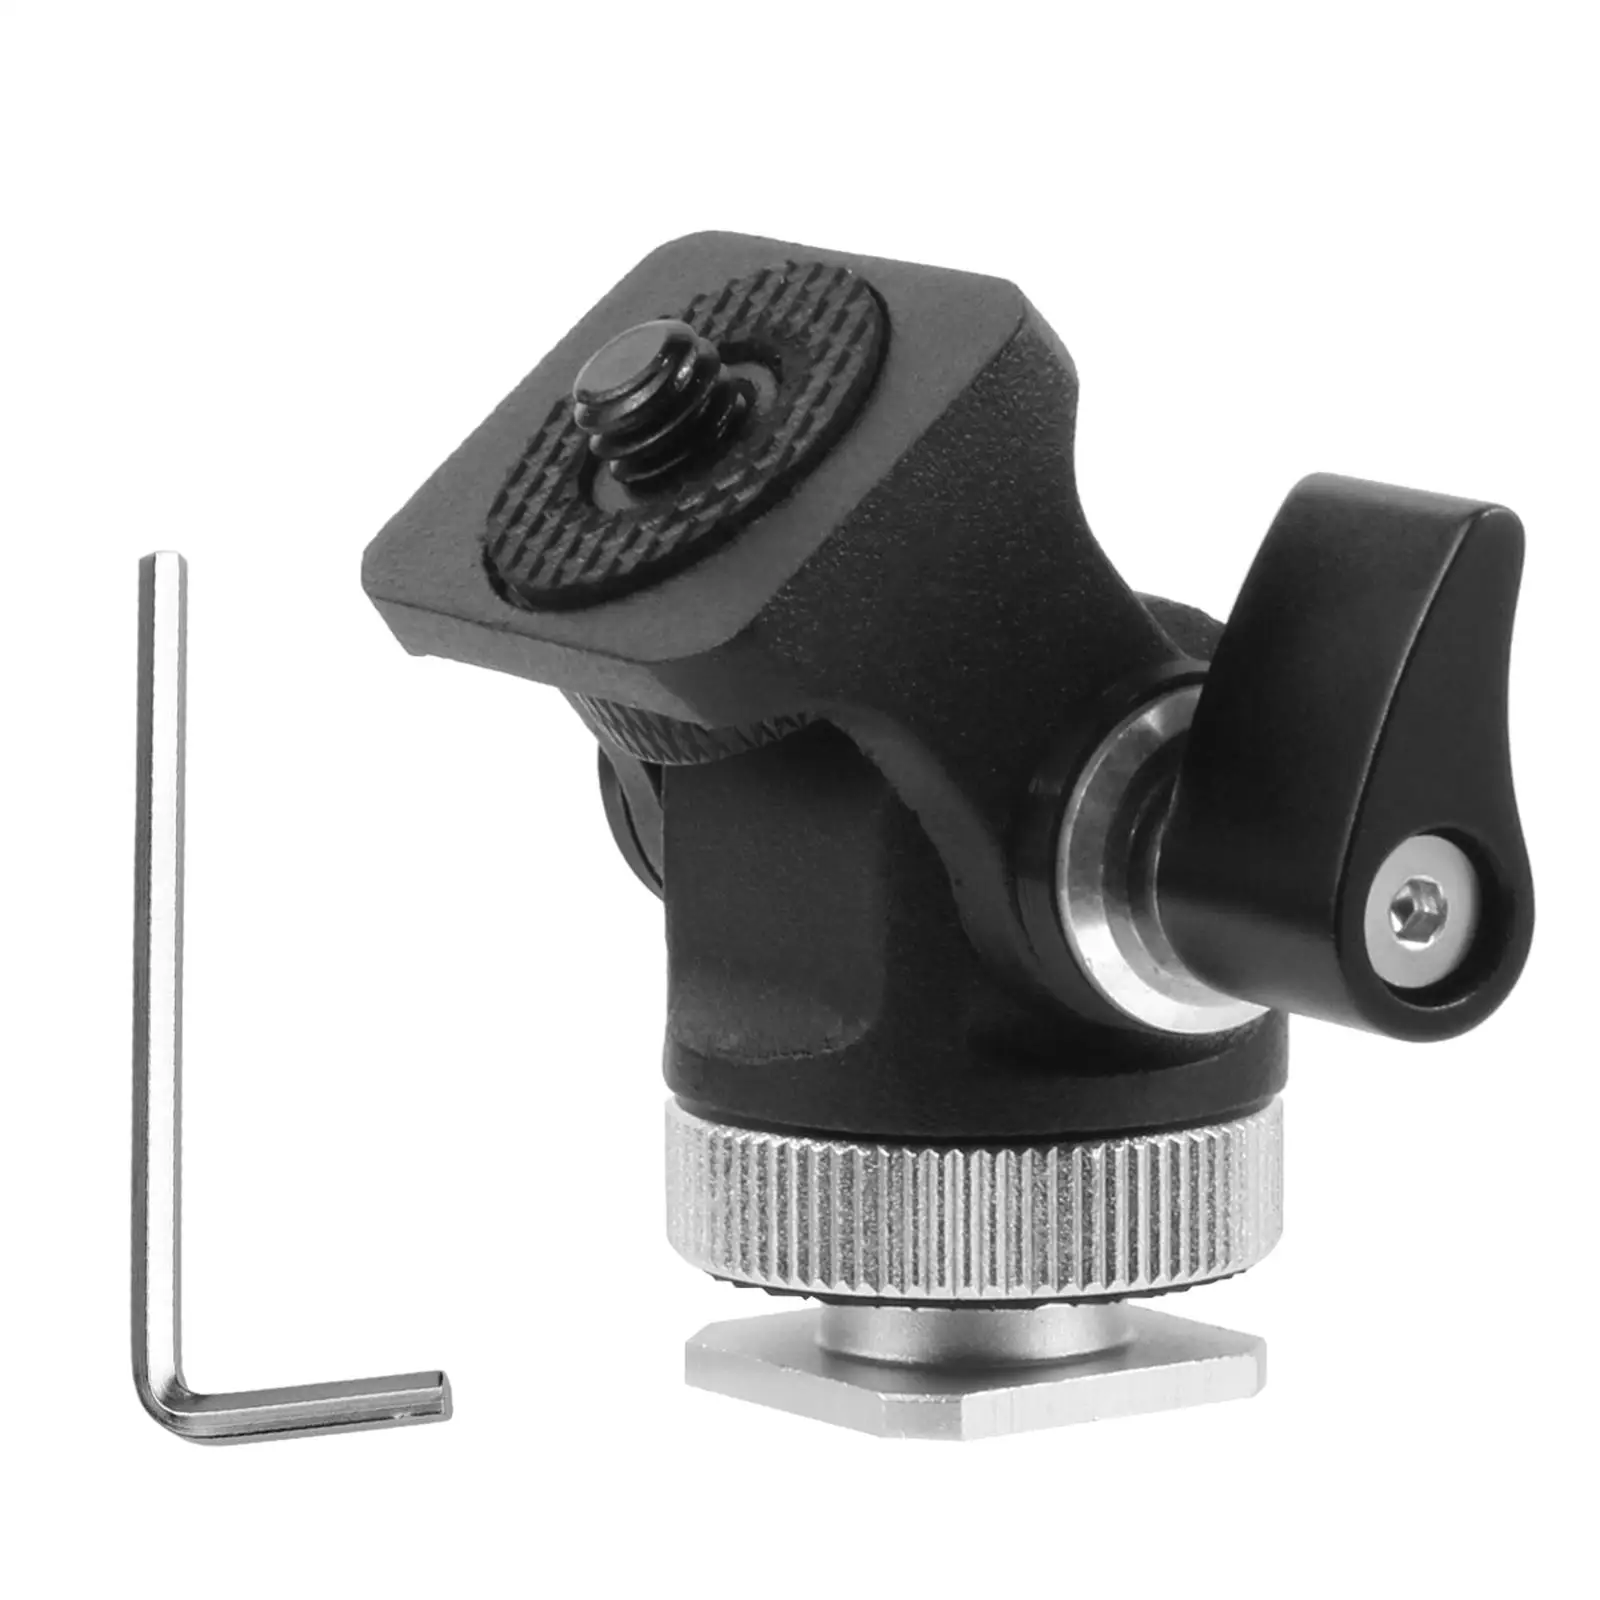 360 Swivel Hot Shoe Mount Adapter Mini Monitor Mount Tripod Head for Mounting Camera